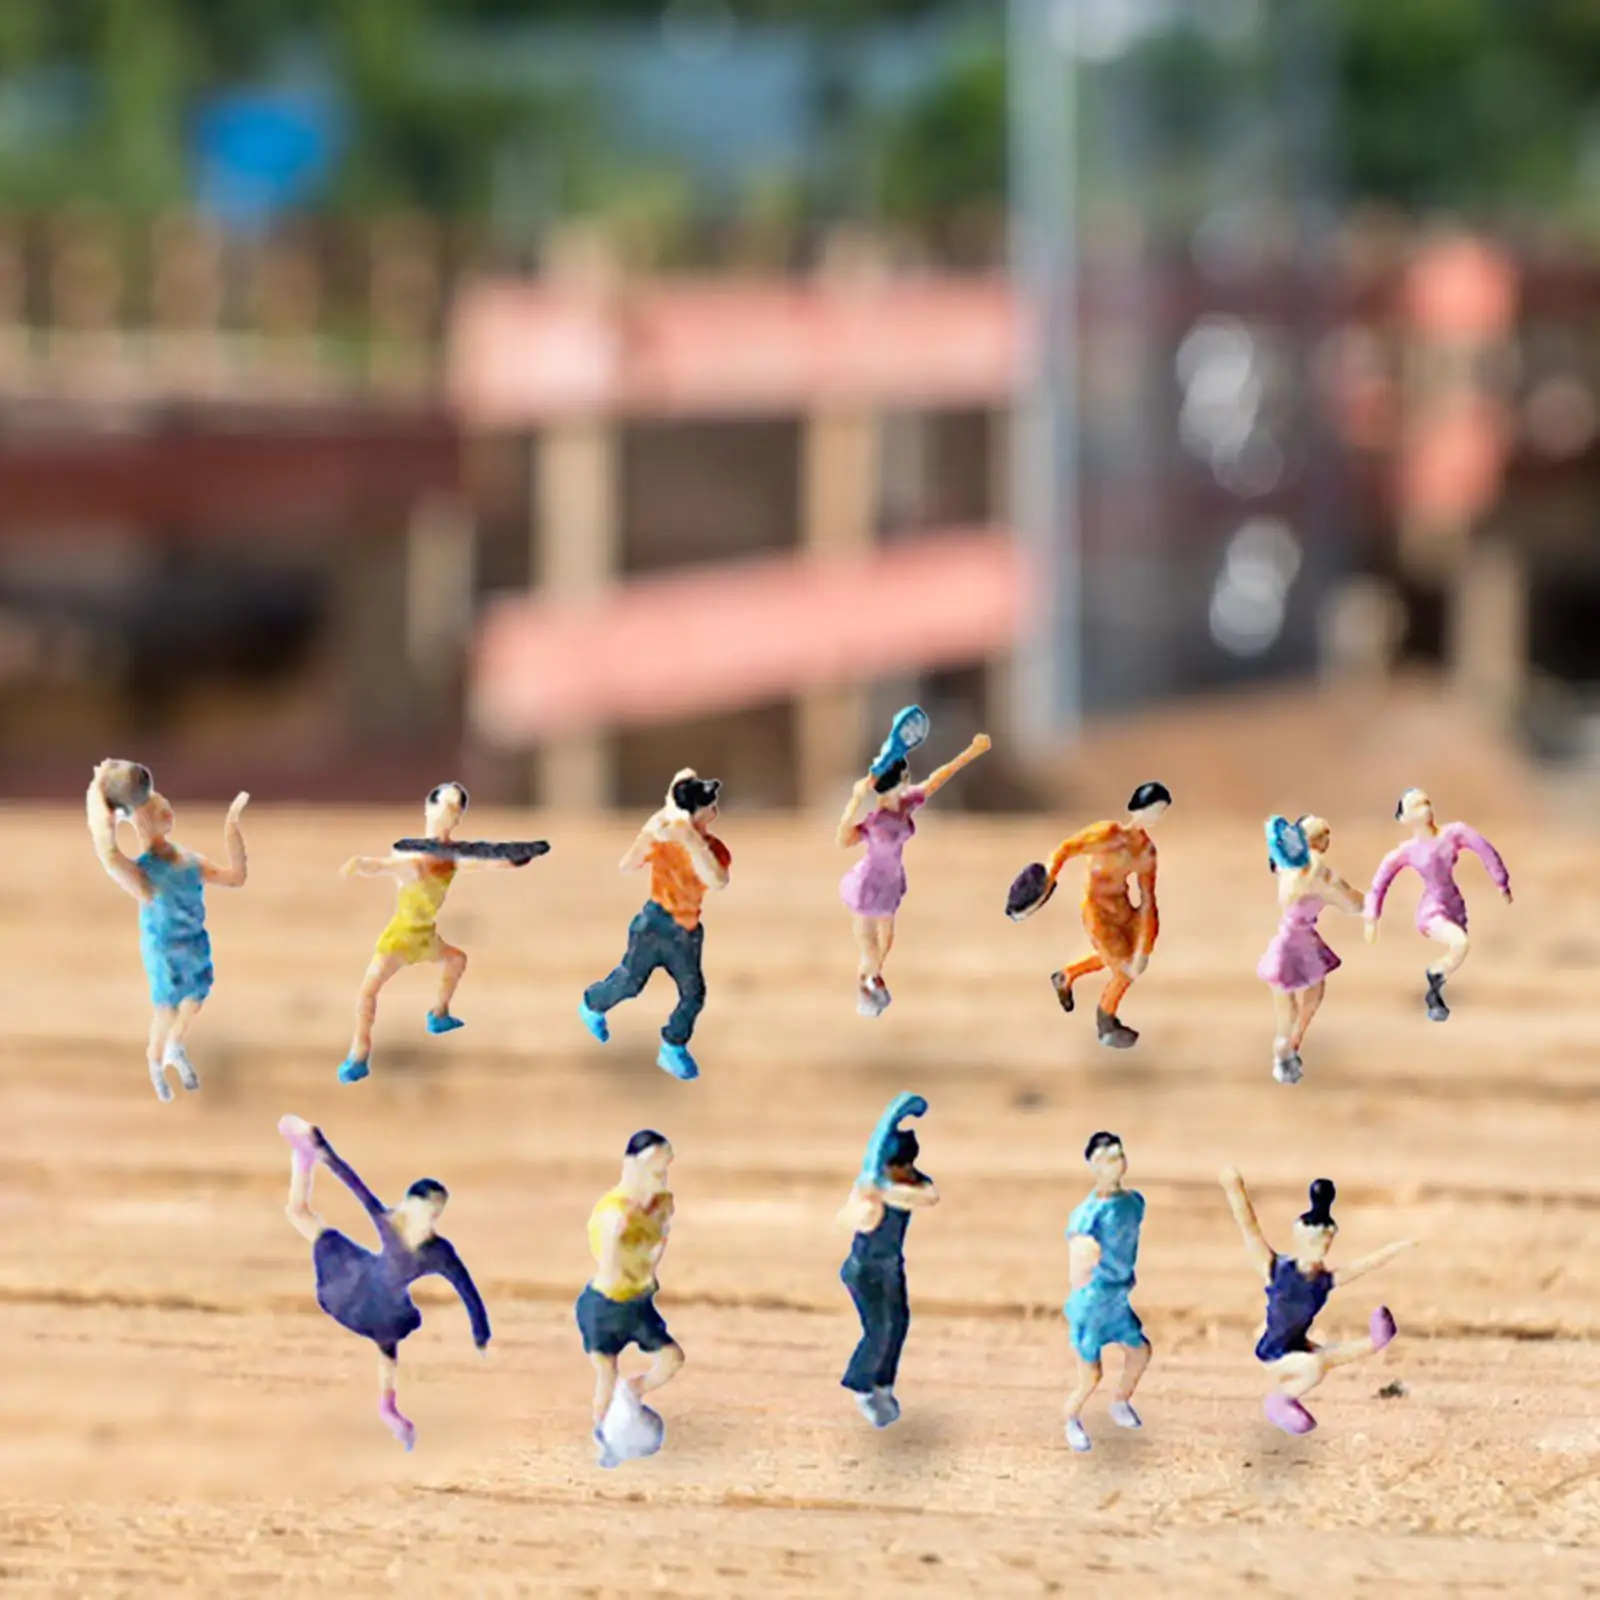 Miniature Sport Player Figurines Miniature Model Figures for Diorama Layout Miniature Scenes Decor Sand Table Layout Decoration